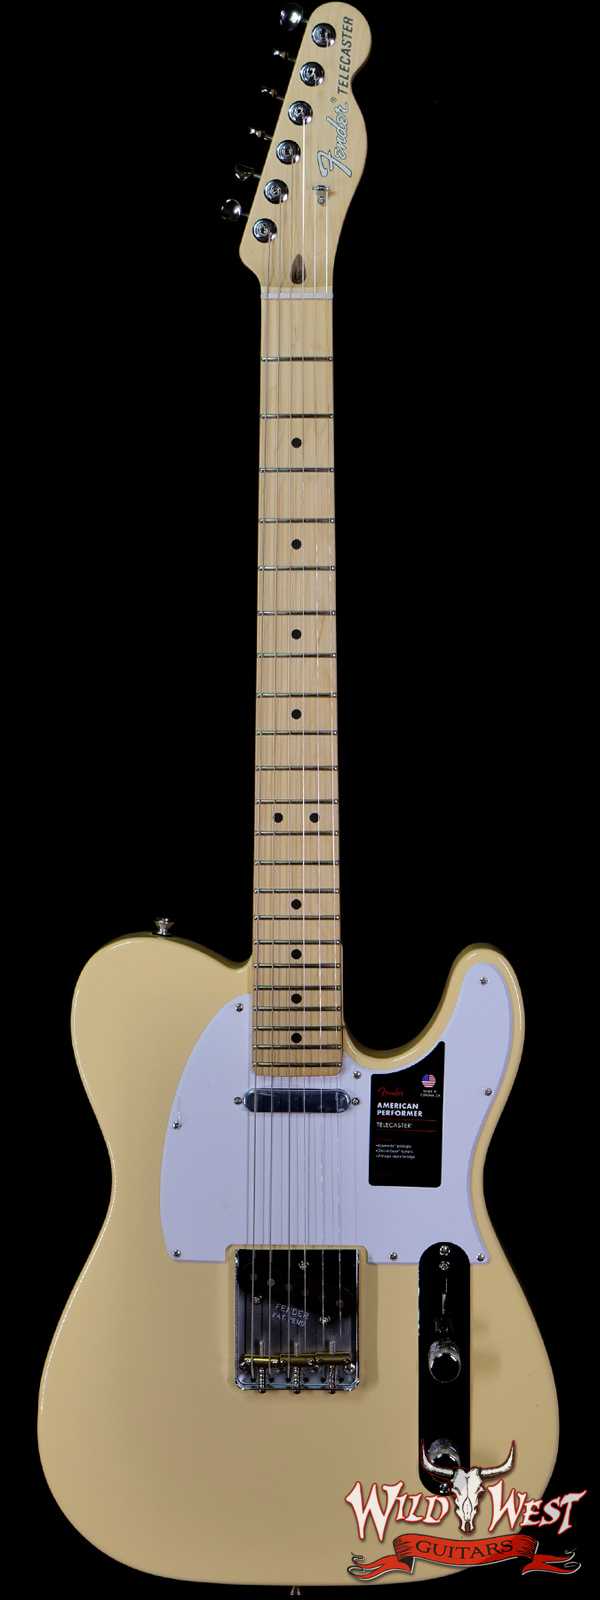 Fender American Performer Telecaster Maple Fingerboard Vintage White